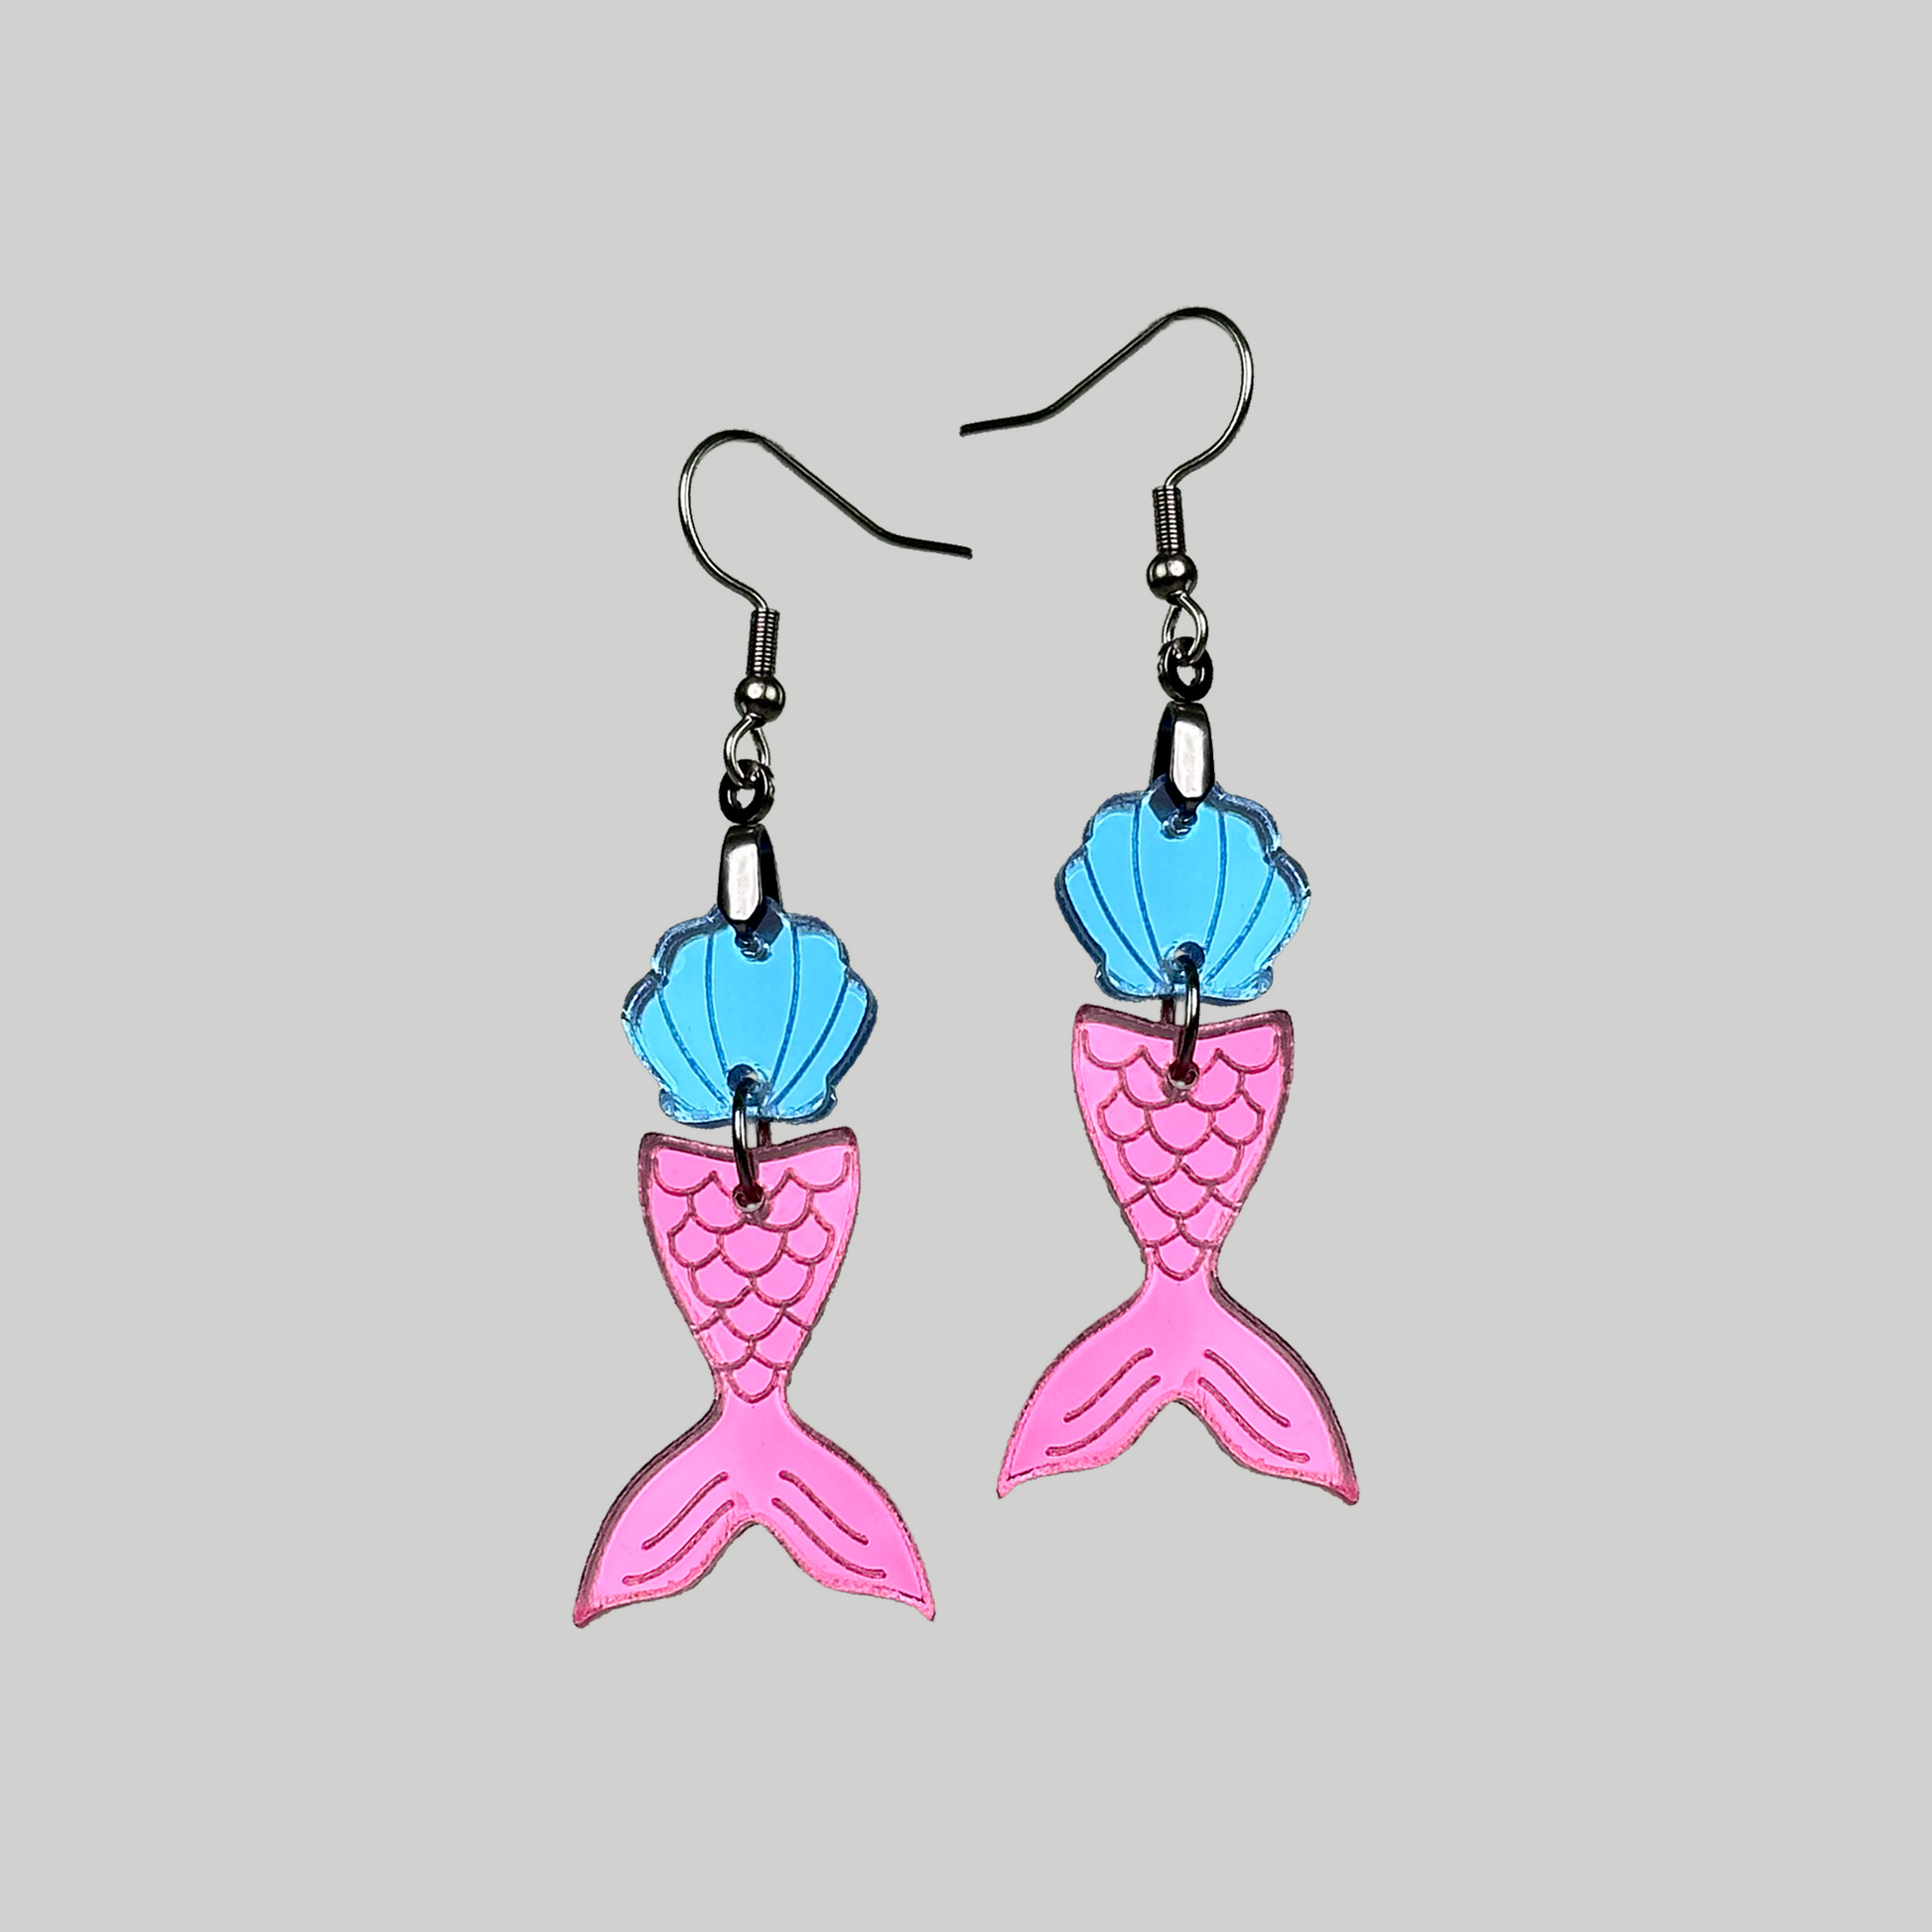 Mermaid Tail Earrings: Enchanting shiny aquatic elegance.